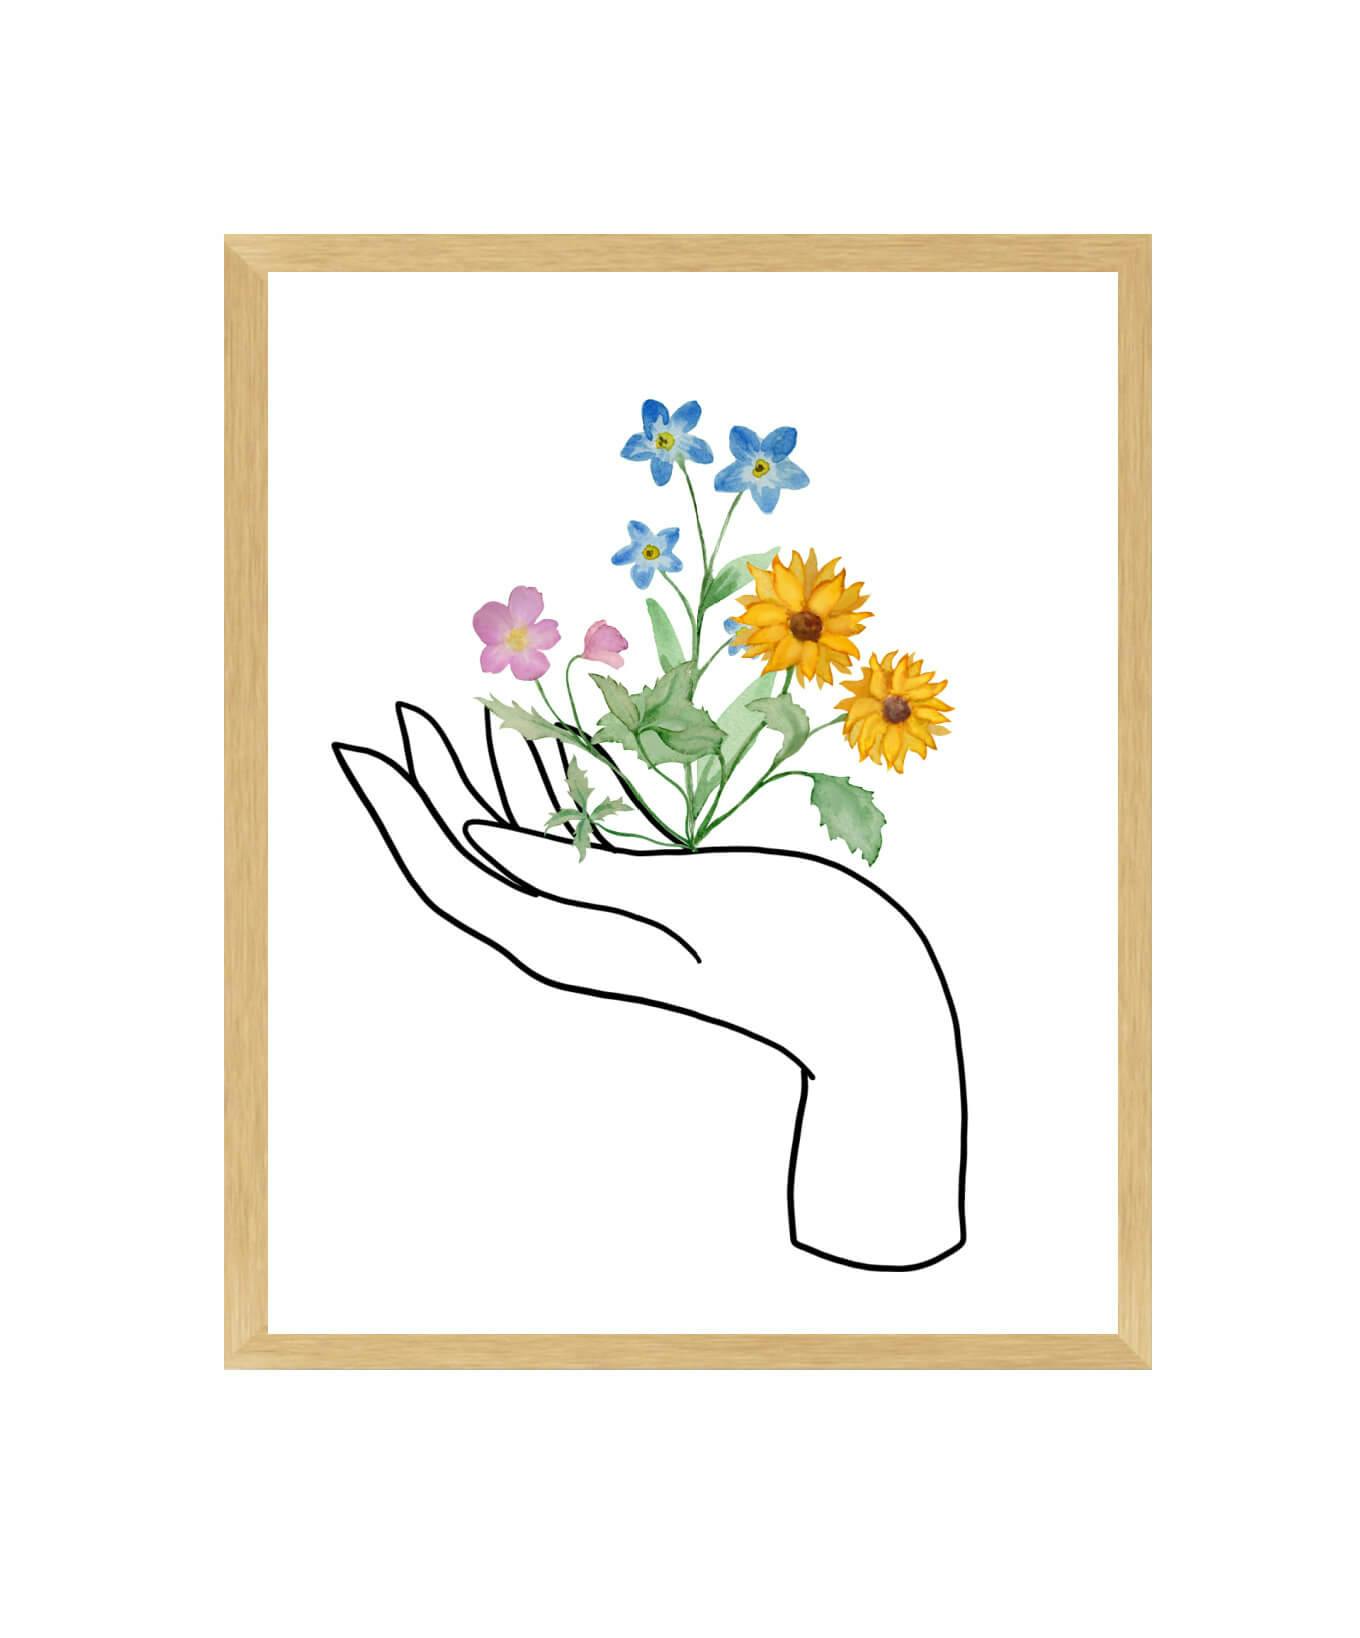 Sketch Hand Holding Flowers Digital Art Print - undefined - bright side girl shoppe